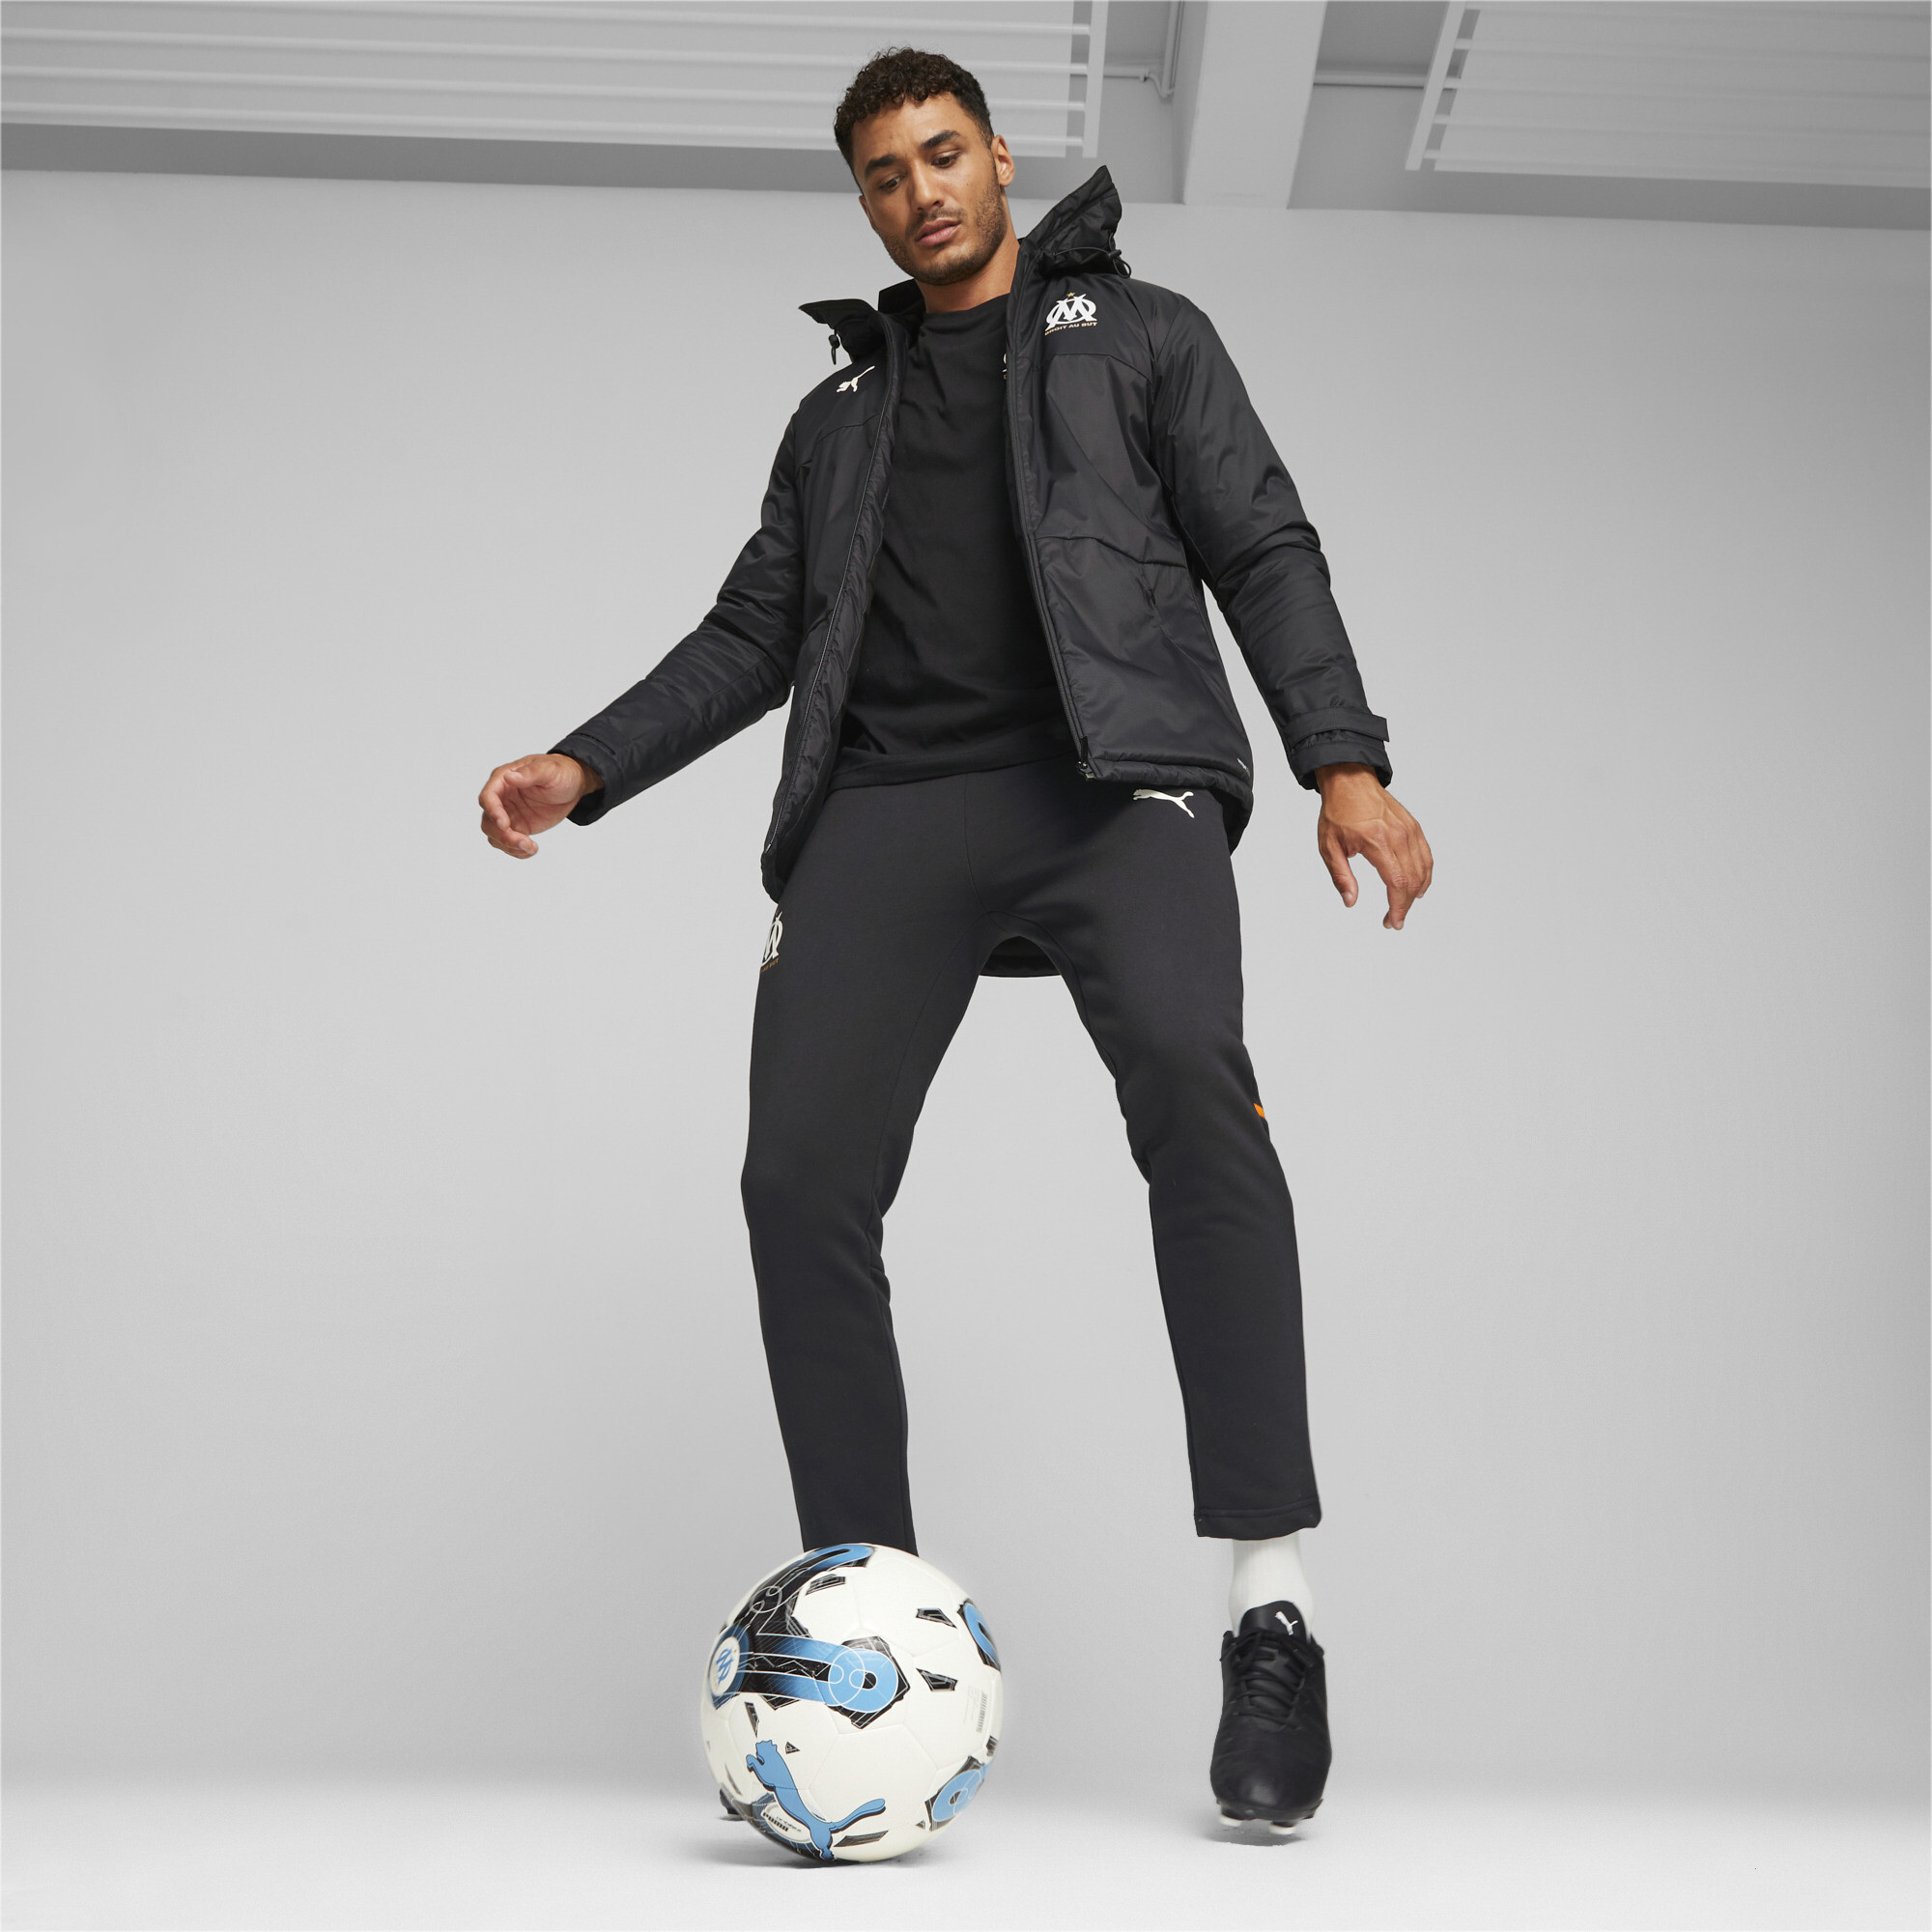 Men's Puma Olympique De Marseille Football Winter Jacket, Black, Size XL, Clothing